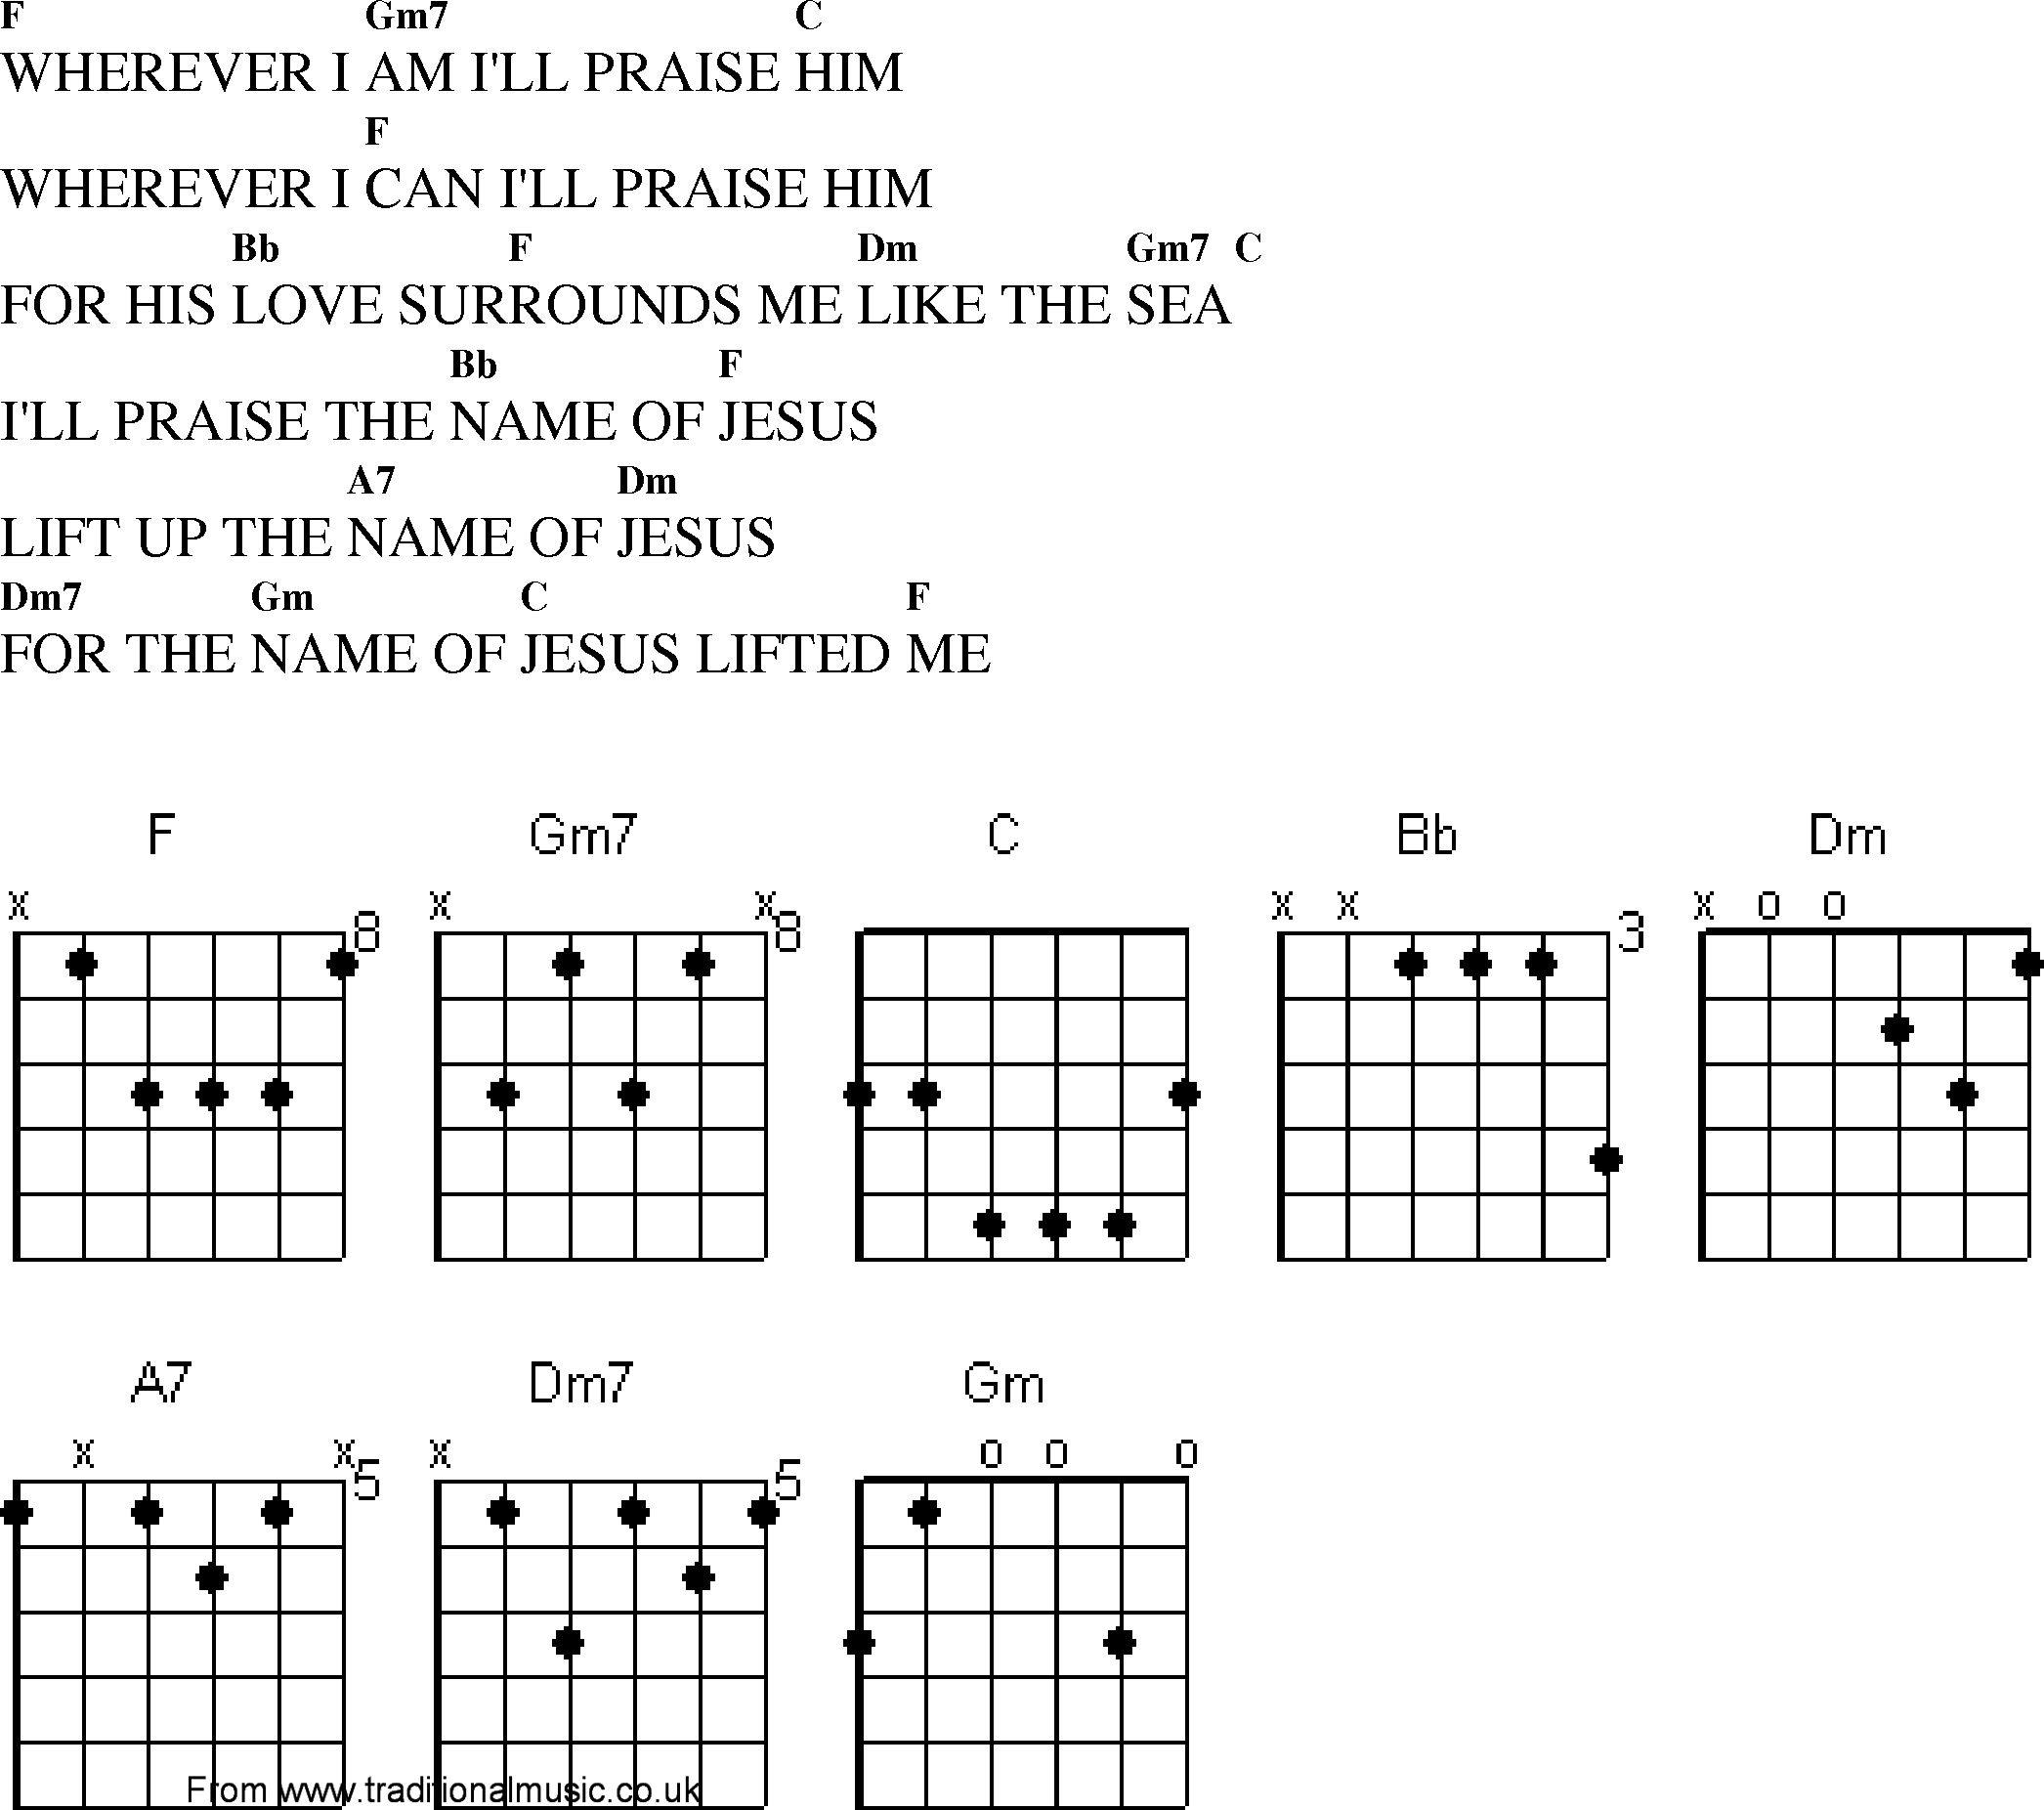 Gospel Song: wherever_i_m_ill_prise_him, lyrics and chords.